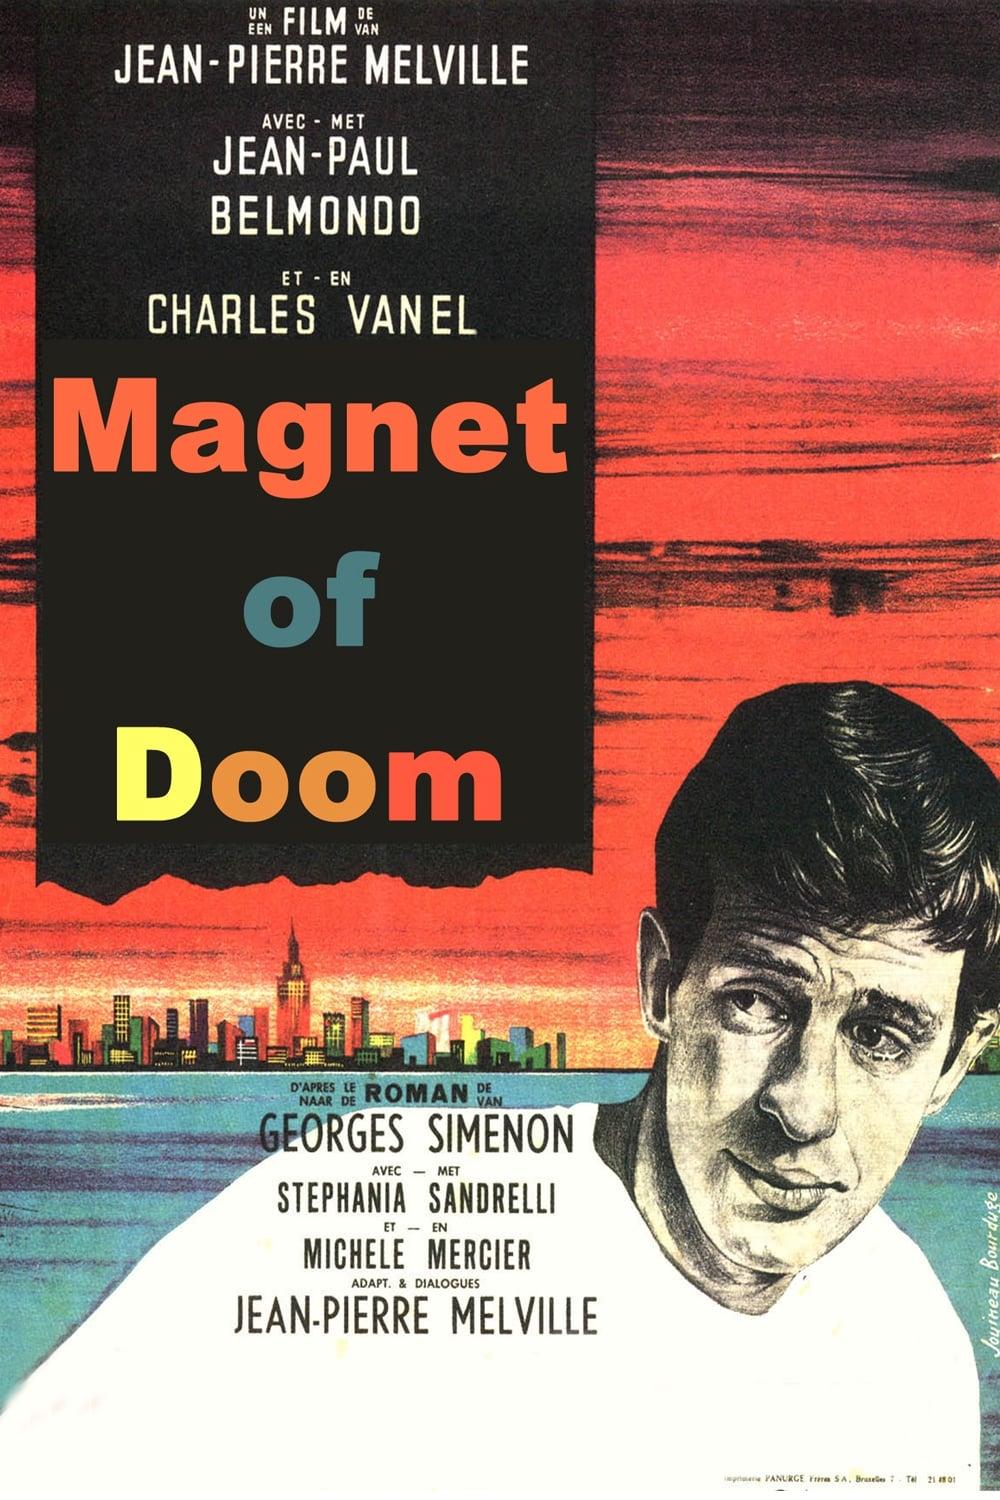 Magnet of Doom poster